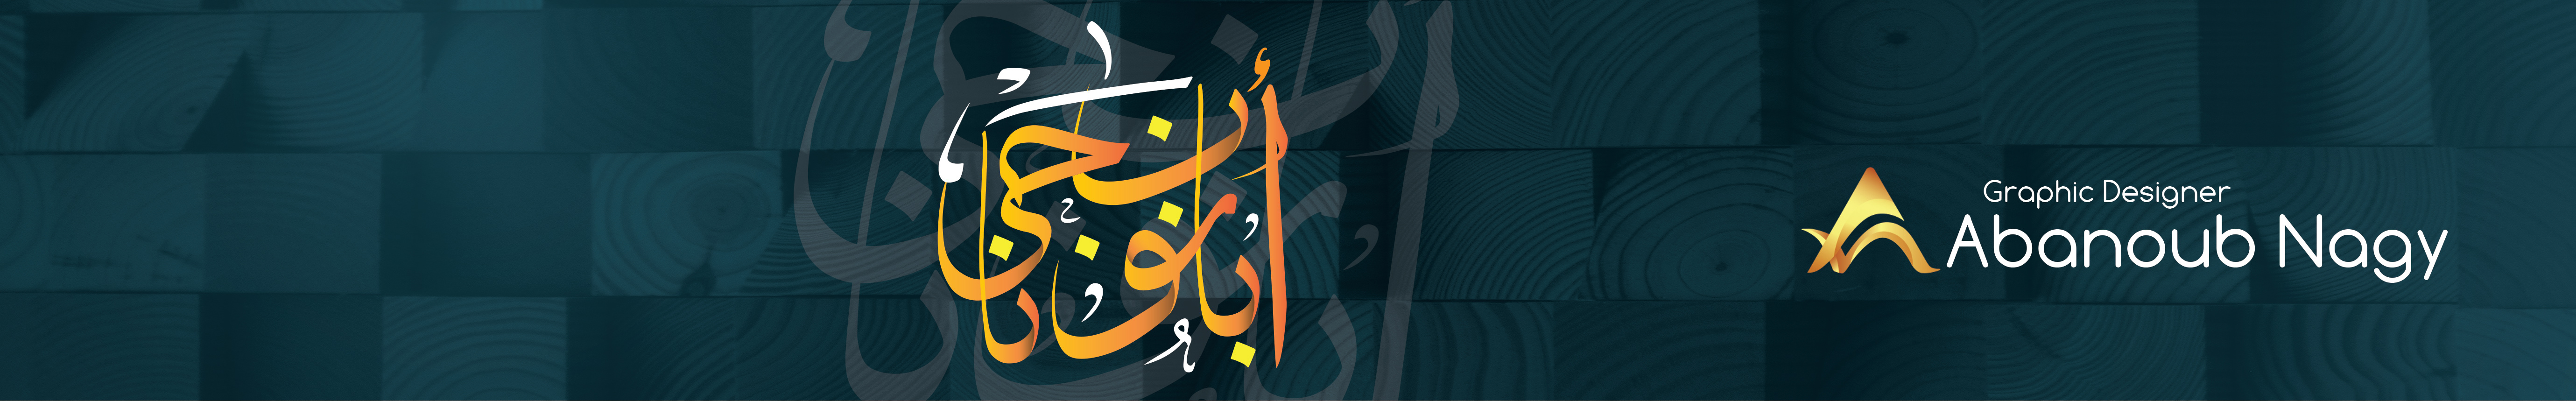 Abanoub Nagy's profile banner